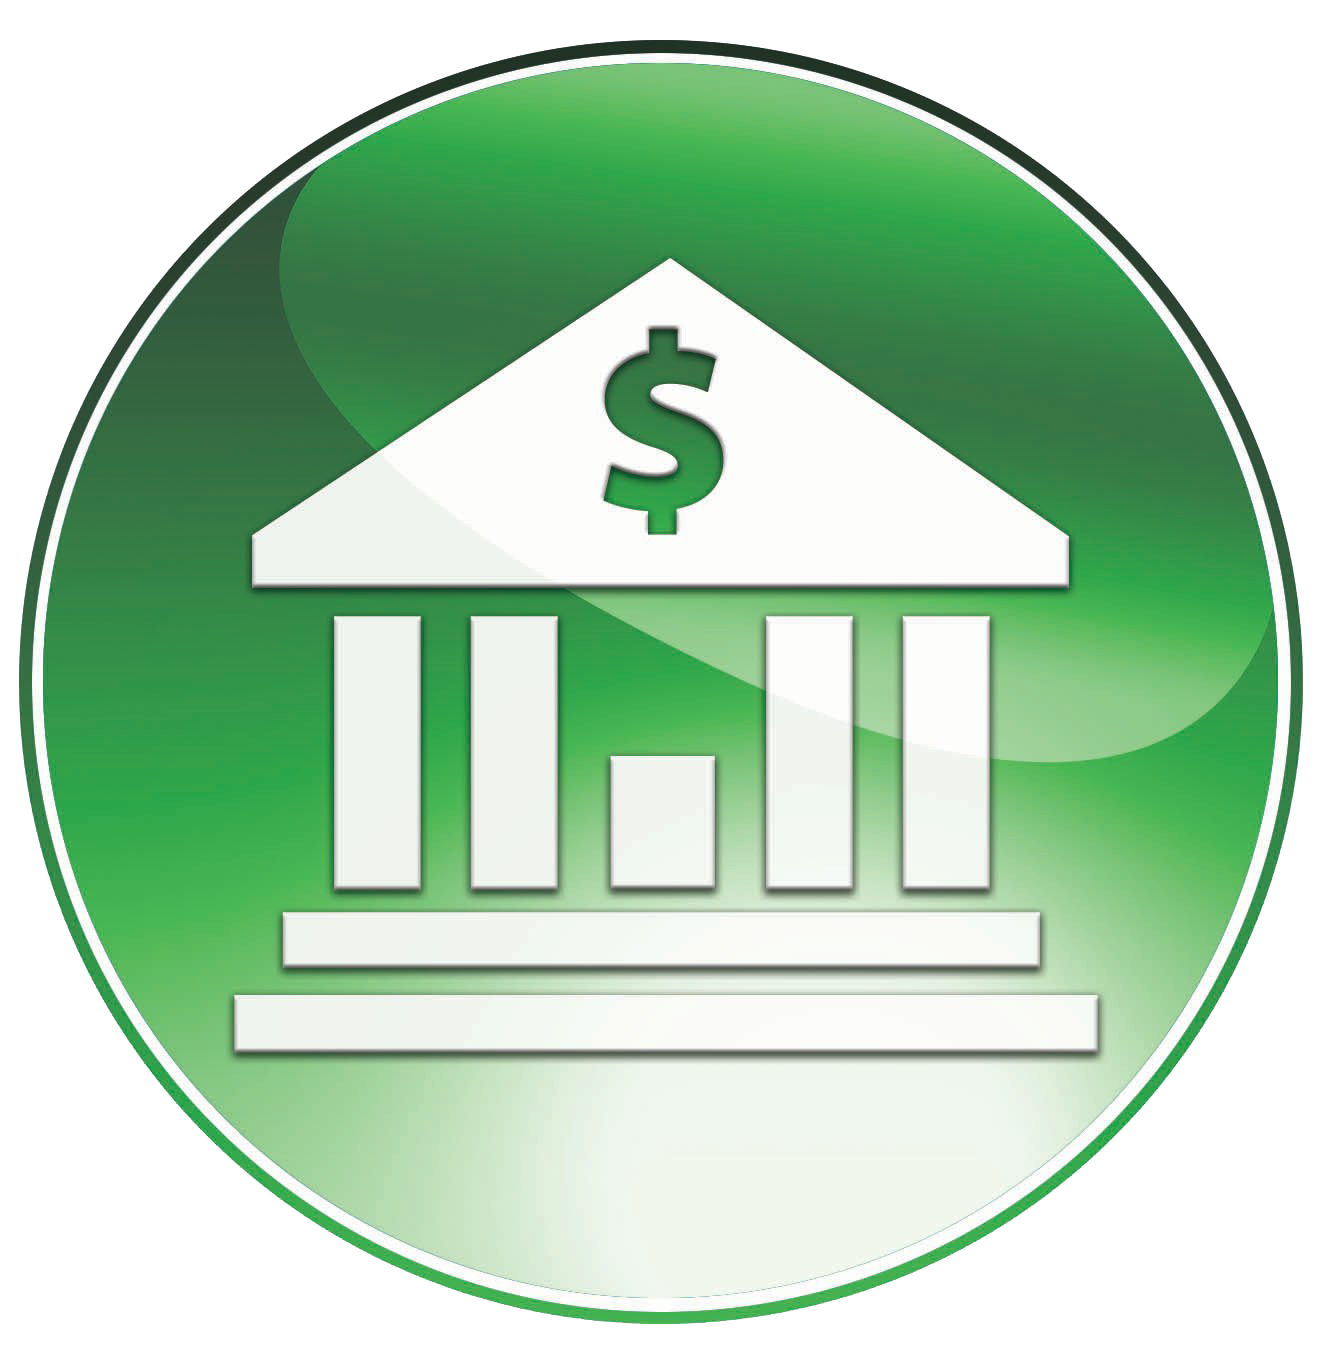 Resona Bank Logo Png Vector Eps Free Download - Bank2home.com